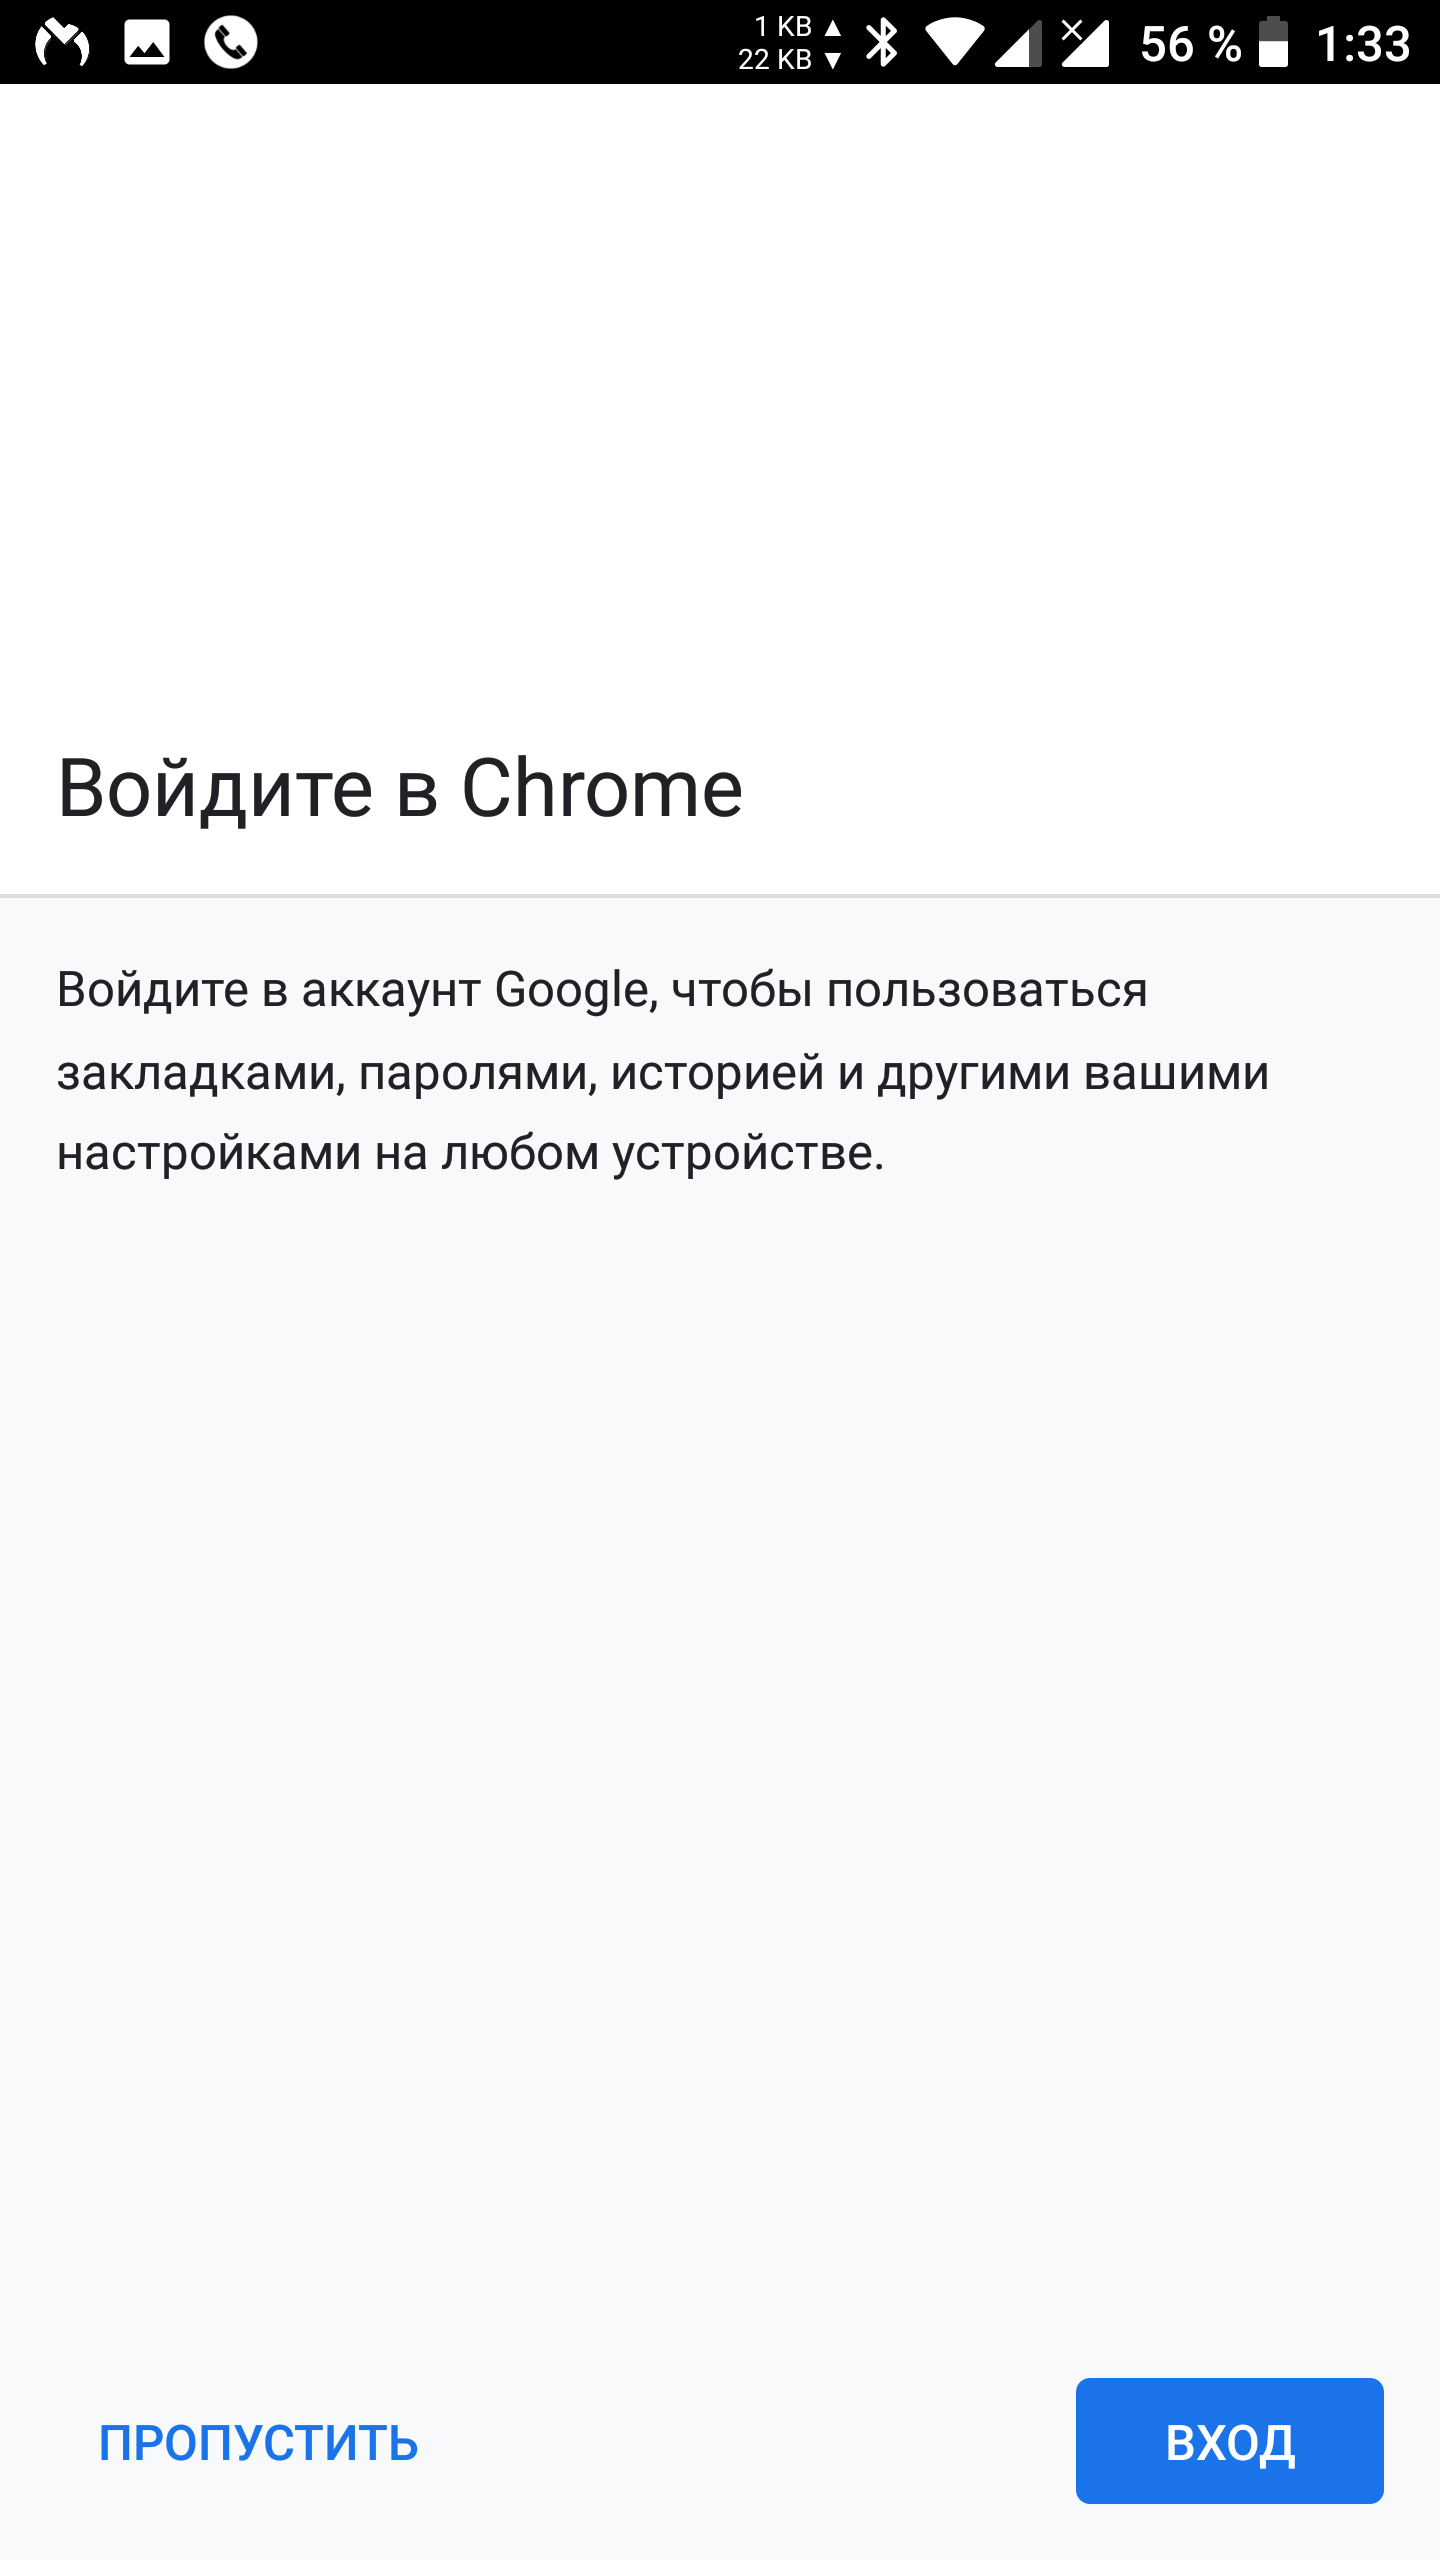 Синхронизация аккаунта Google и Chromium